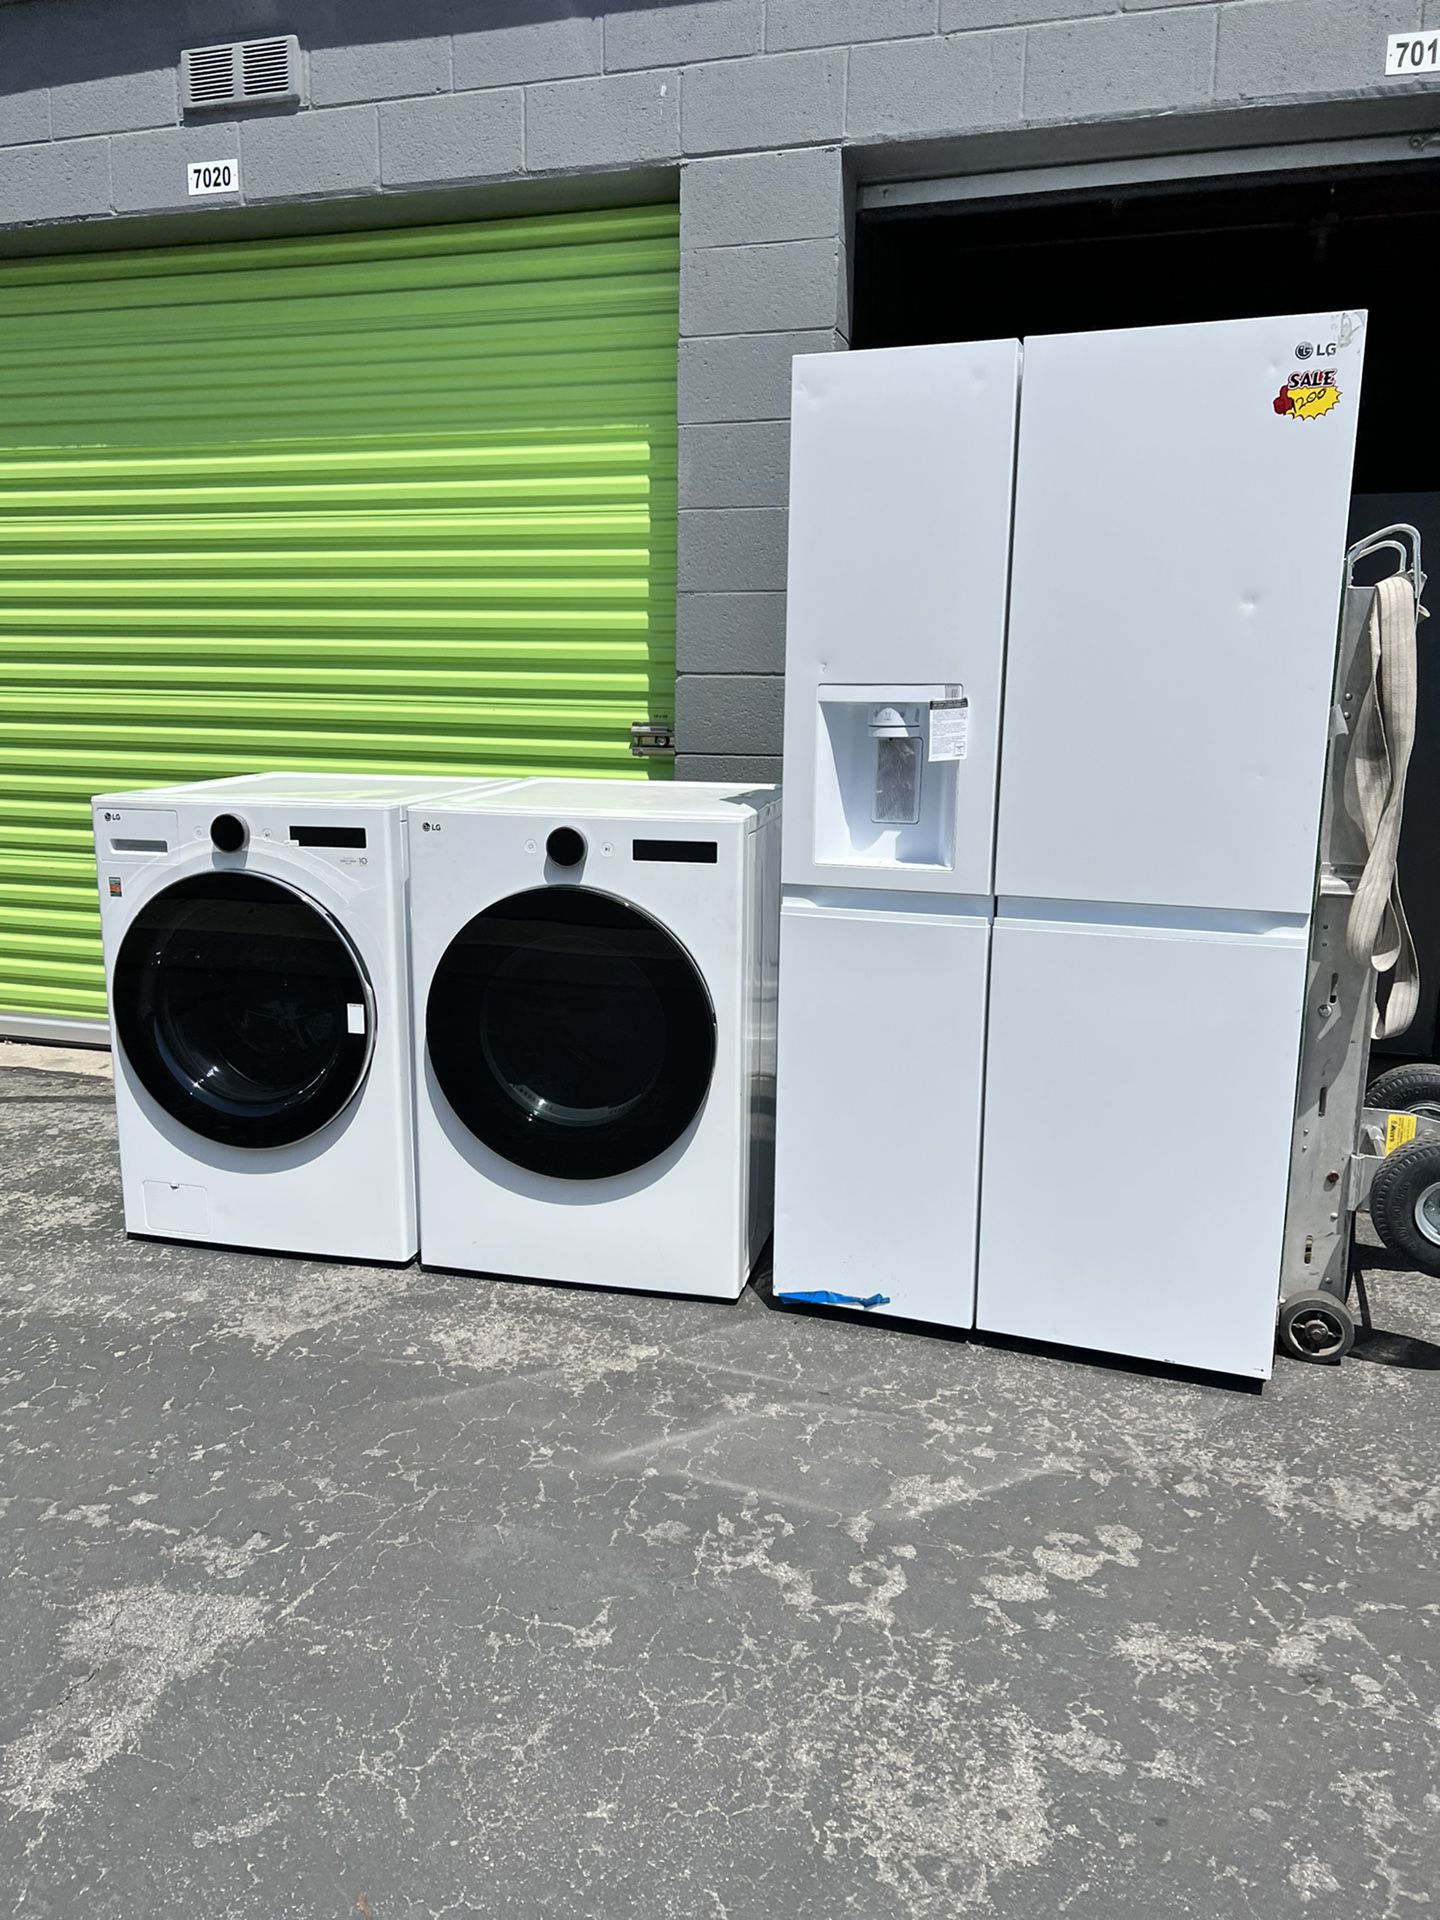 LG Refrigerator White New. 💵 Washer And Dryer Set 